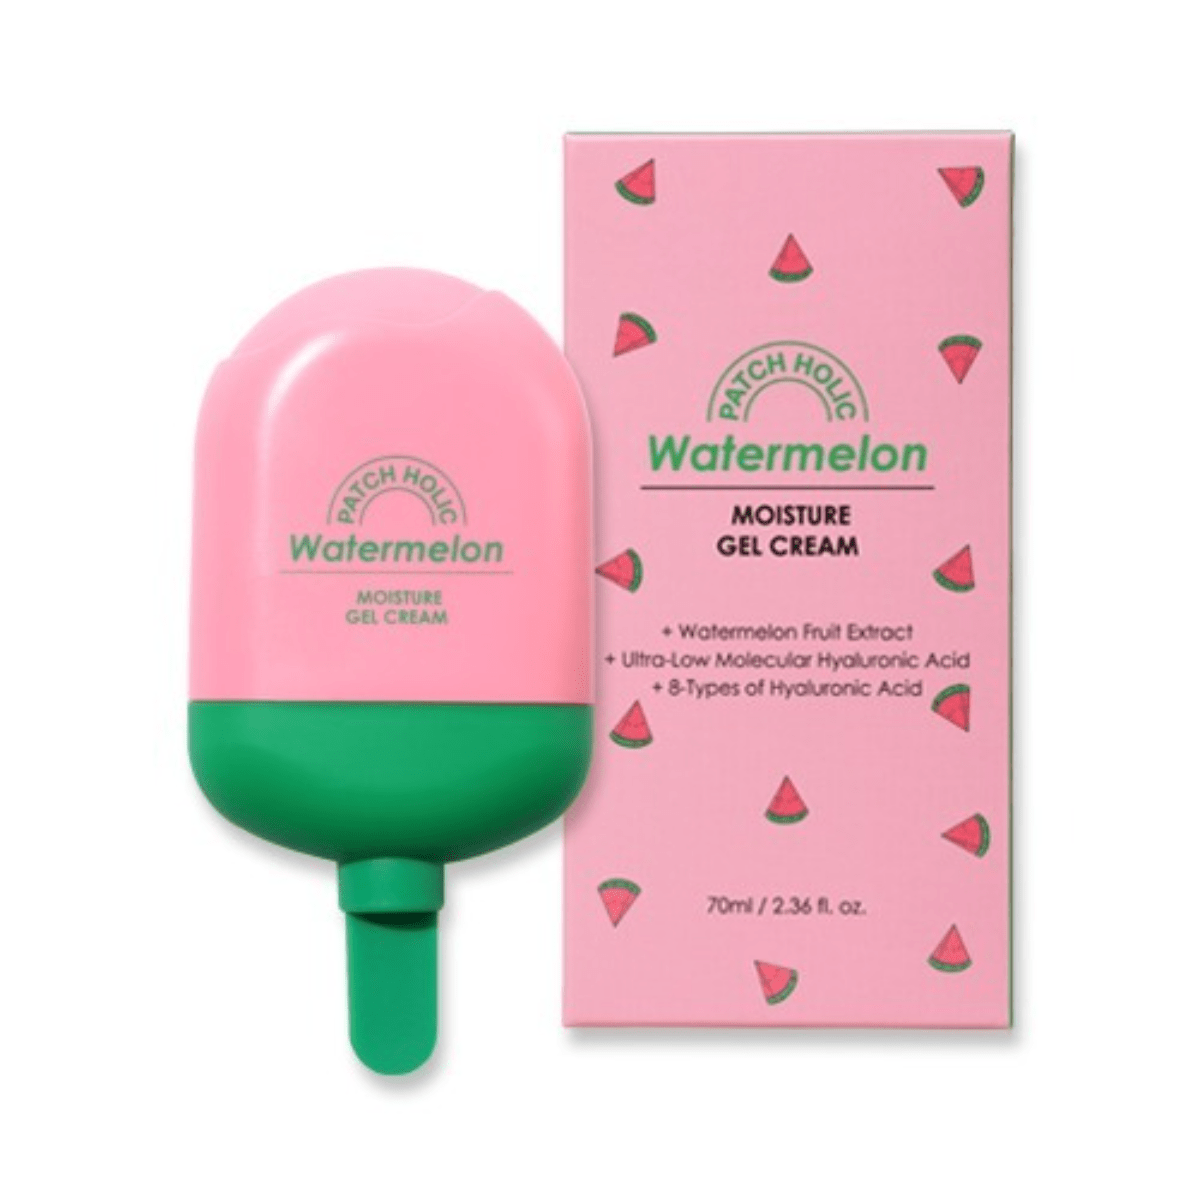 Crema Facial en Gel Patch Holic Watermelon Moisture 70ml - Crema Facial